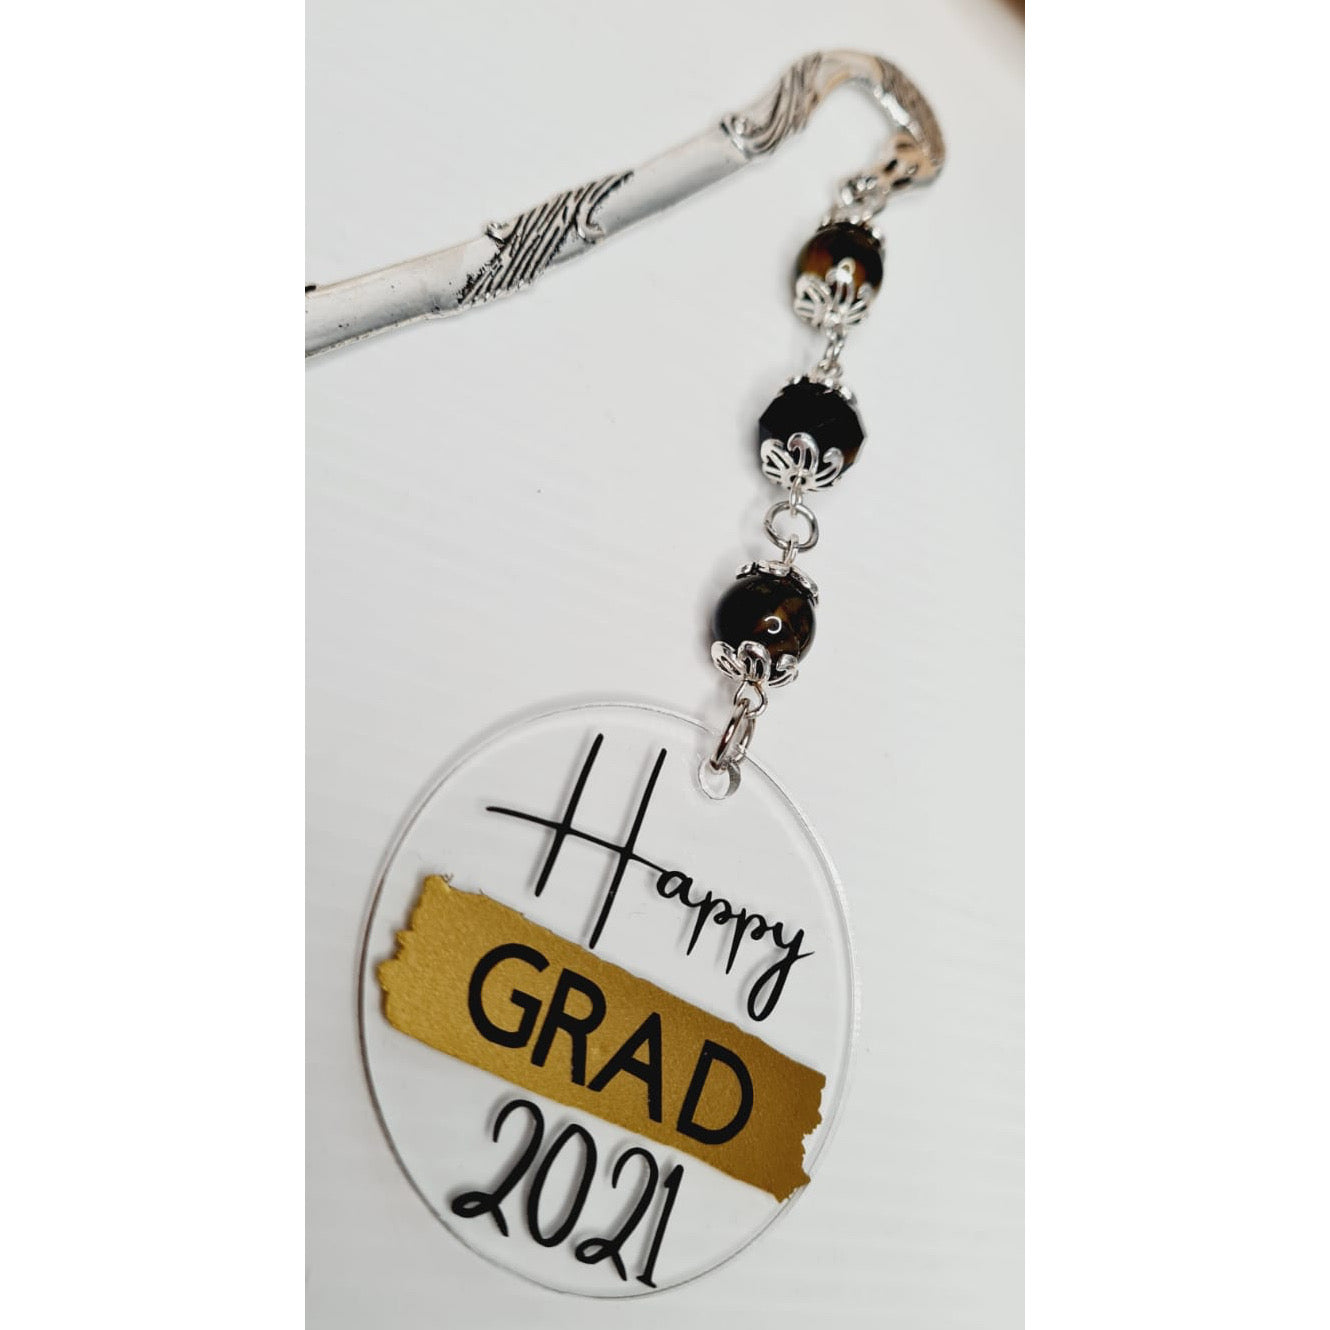 Graduation Bookmark